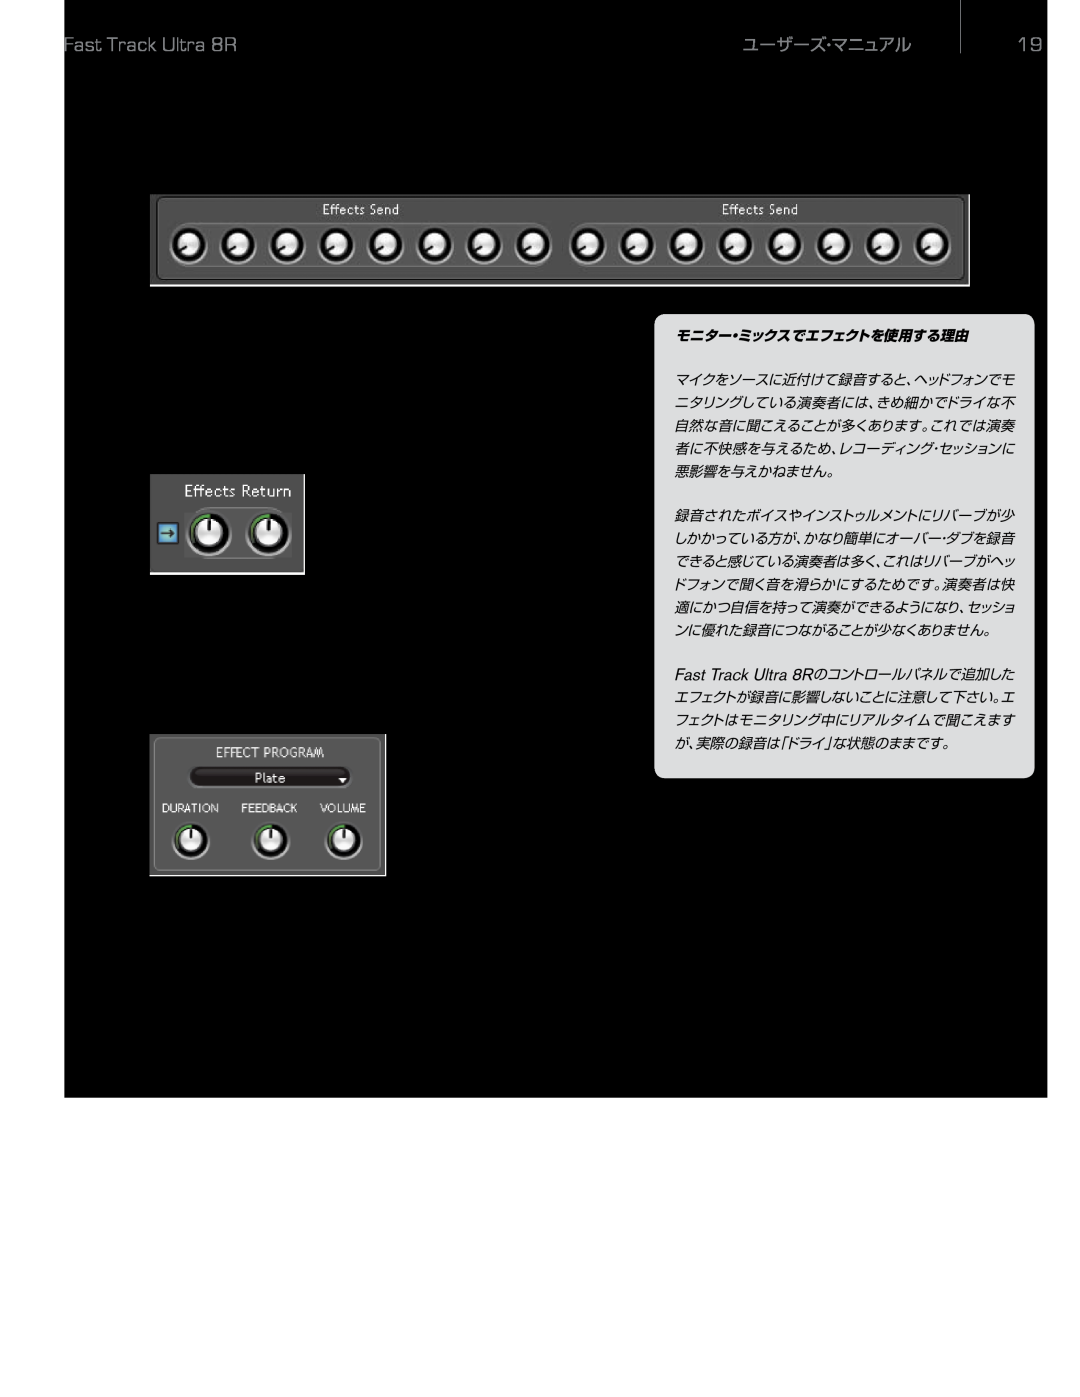 M-Audio manual Fast Track Ultra 8R, ユーザーズ・マニュアル, モニター・ミックスでエフェクトを使用する理由 